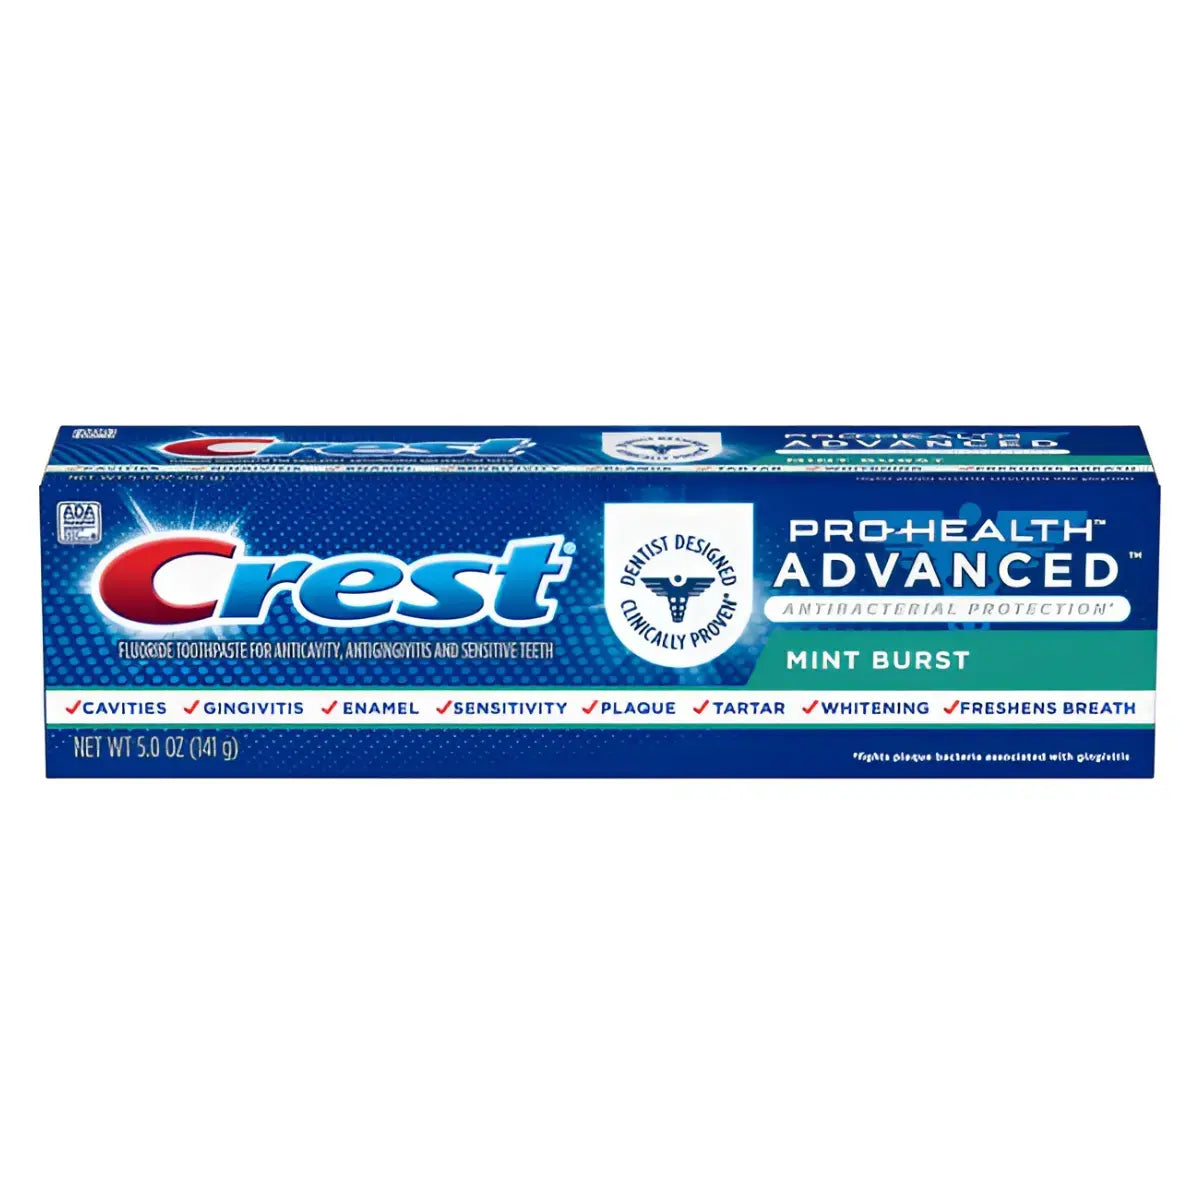 Tandpasta Crest Pro+Health Advanced Antibacterial Protection Mint Burst 141g